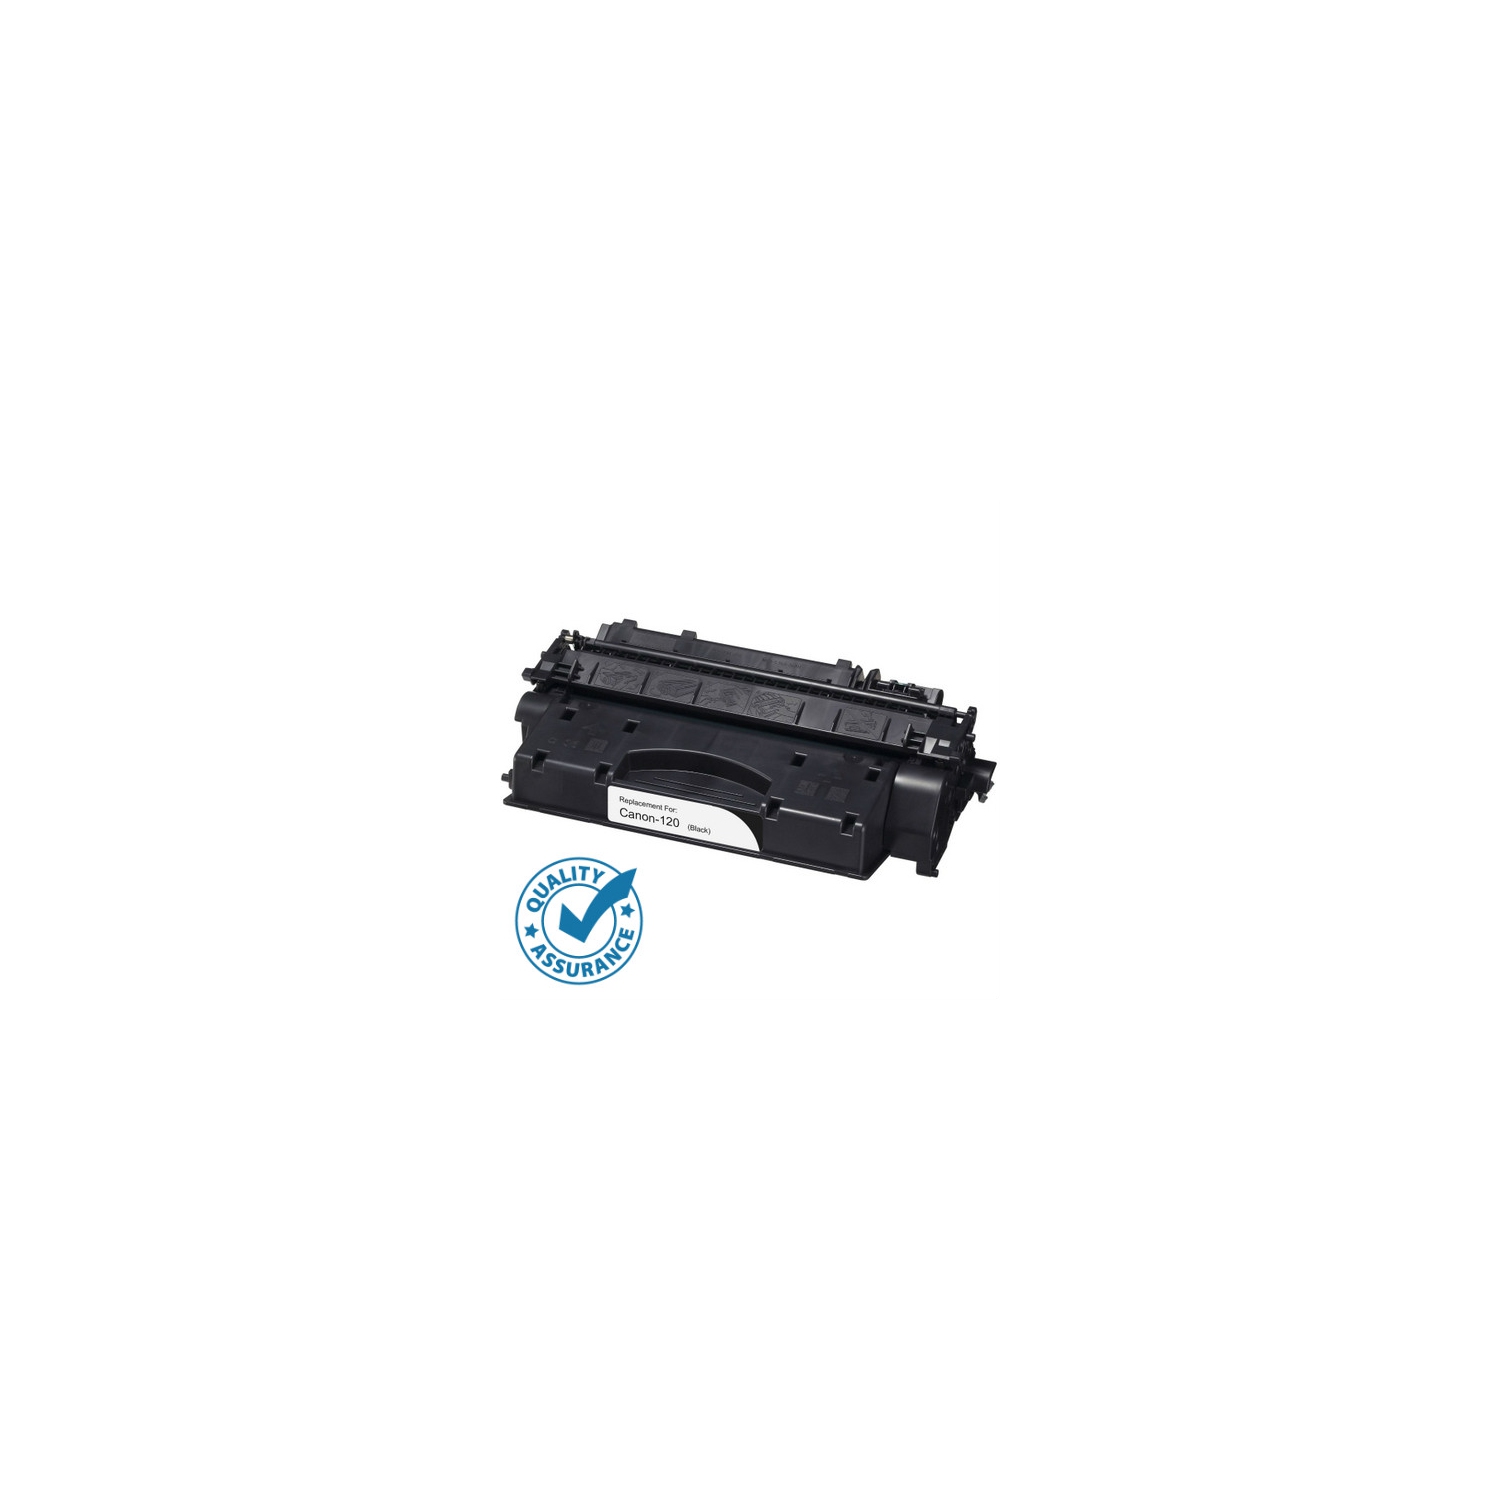 Printer Pro™ Canon 120/Canon-120 Compatible Black Toner Cartridge- Canon Printer ImageClass D1120 D1150 D1350 D1370